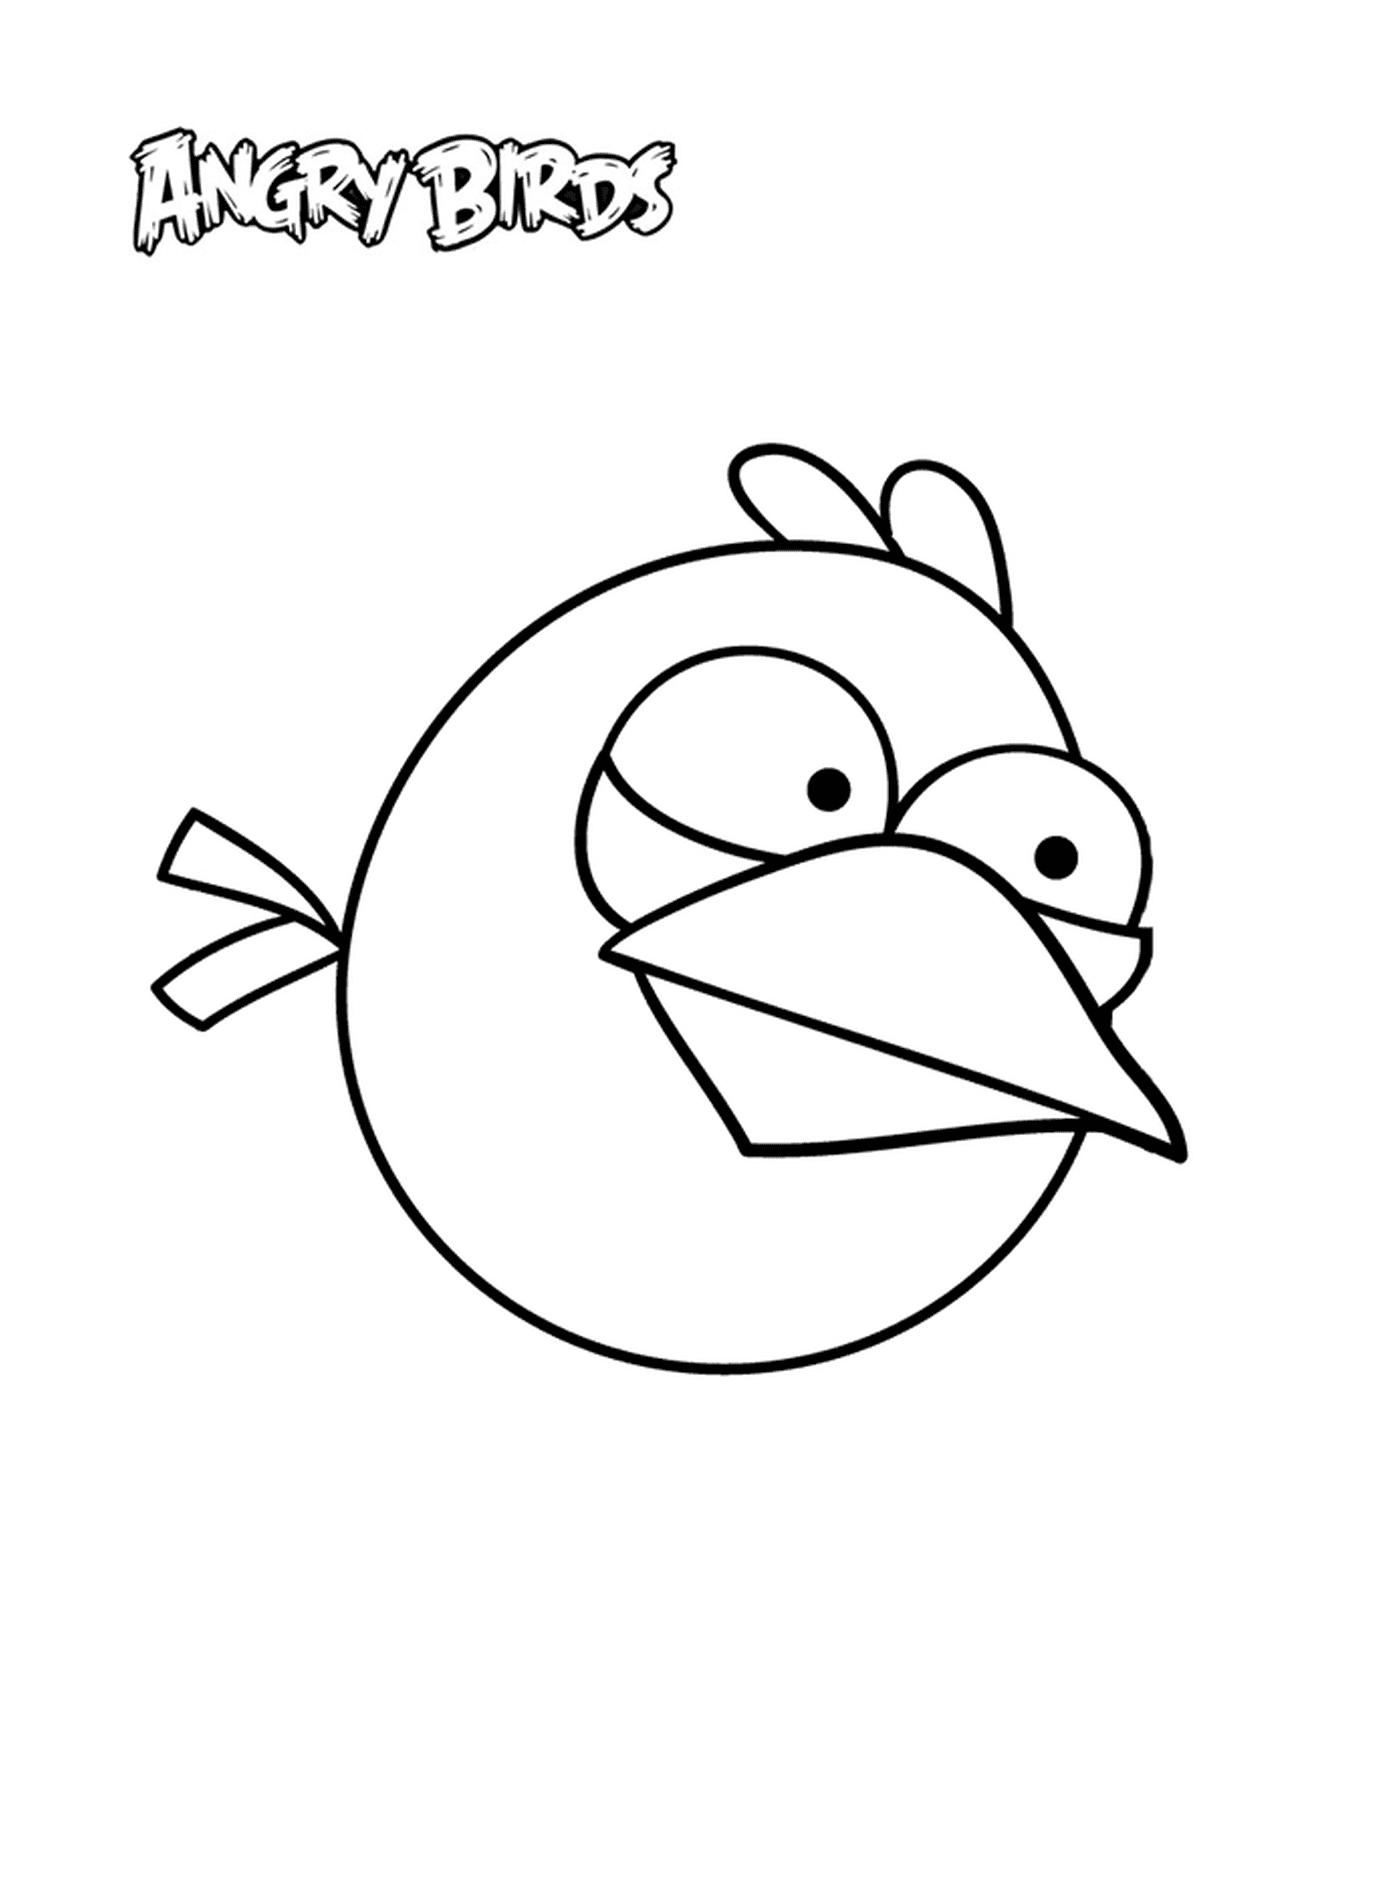  An image of an Angry Bird 